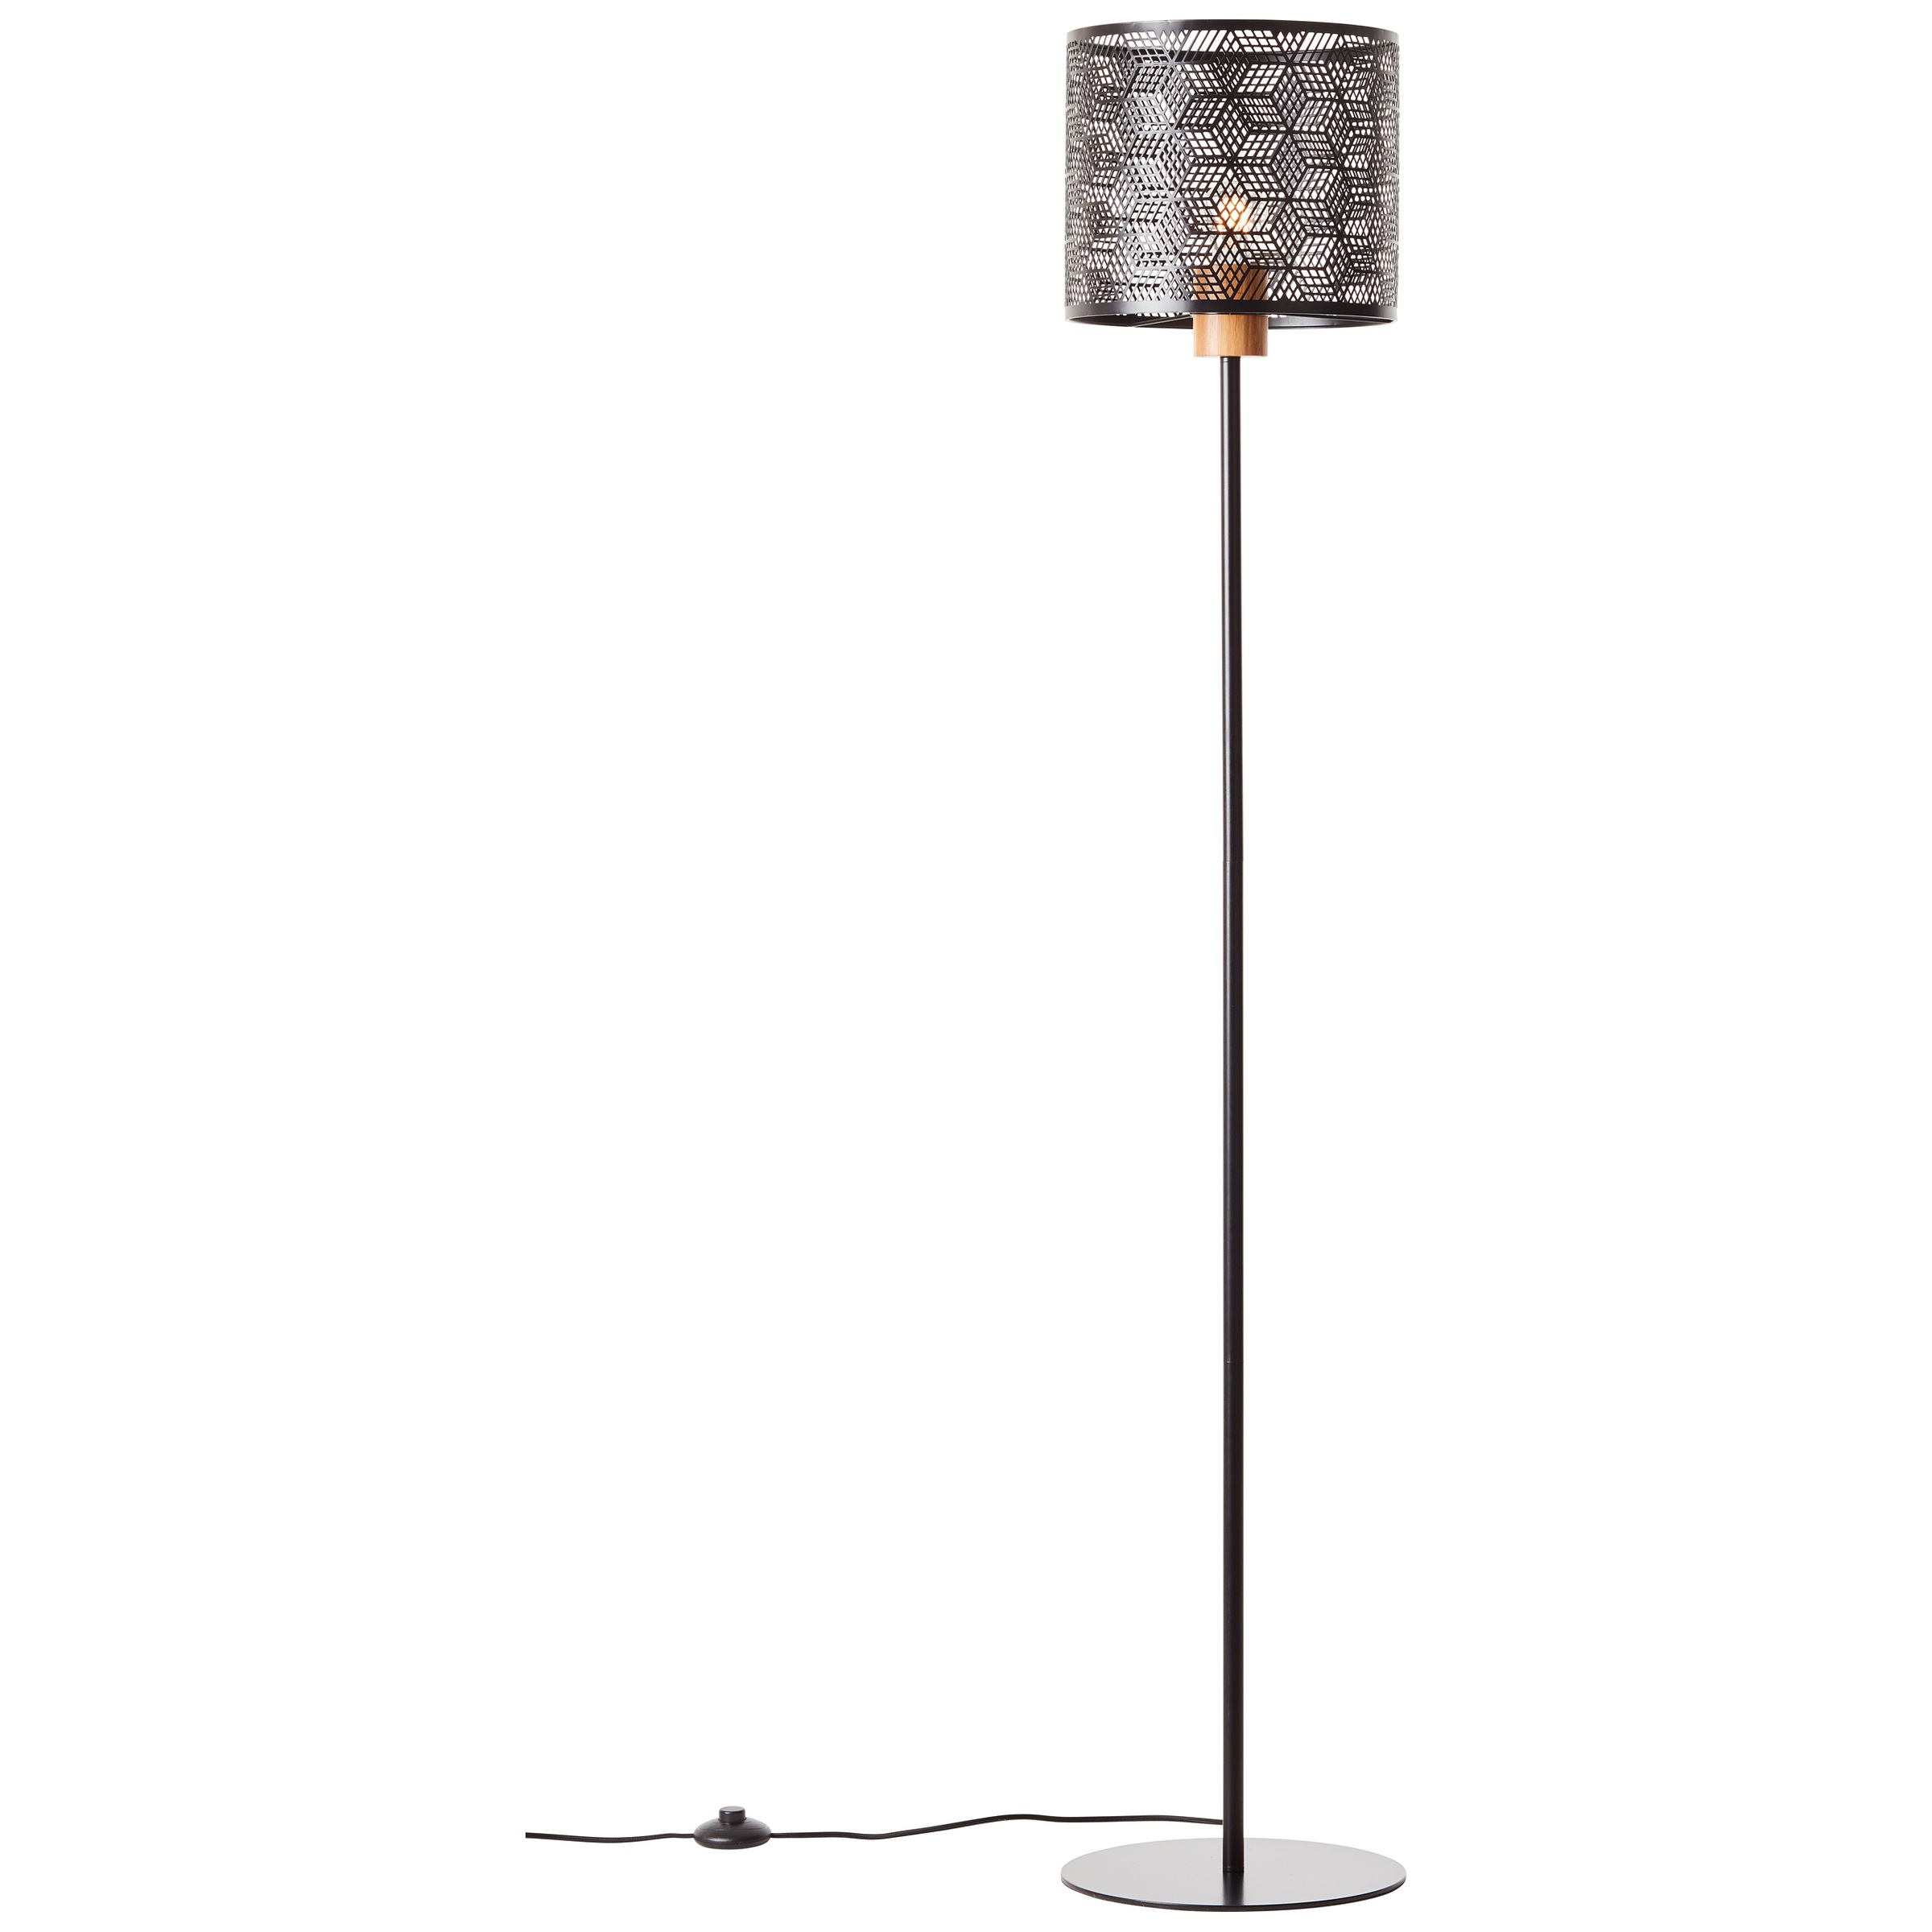 Brilliant Stehlampe »Santy«, 1 flammig-flammig, 161 x 29 cm, E27, Metall/Bambus, schwarz/natur